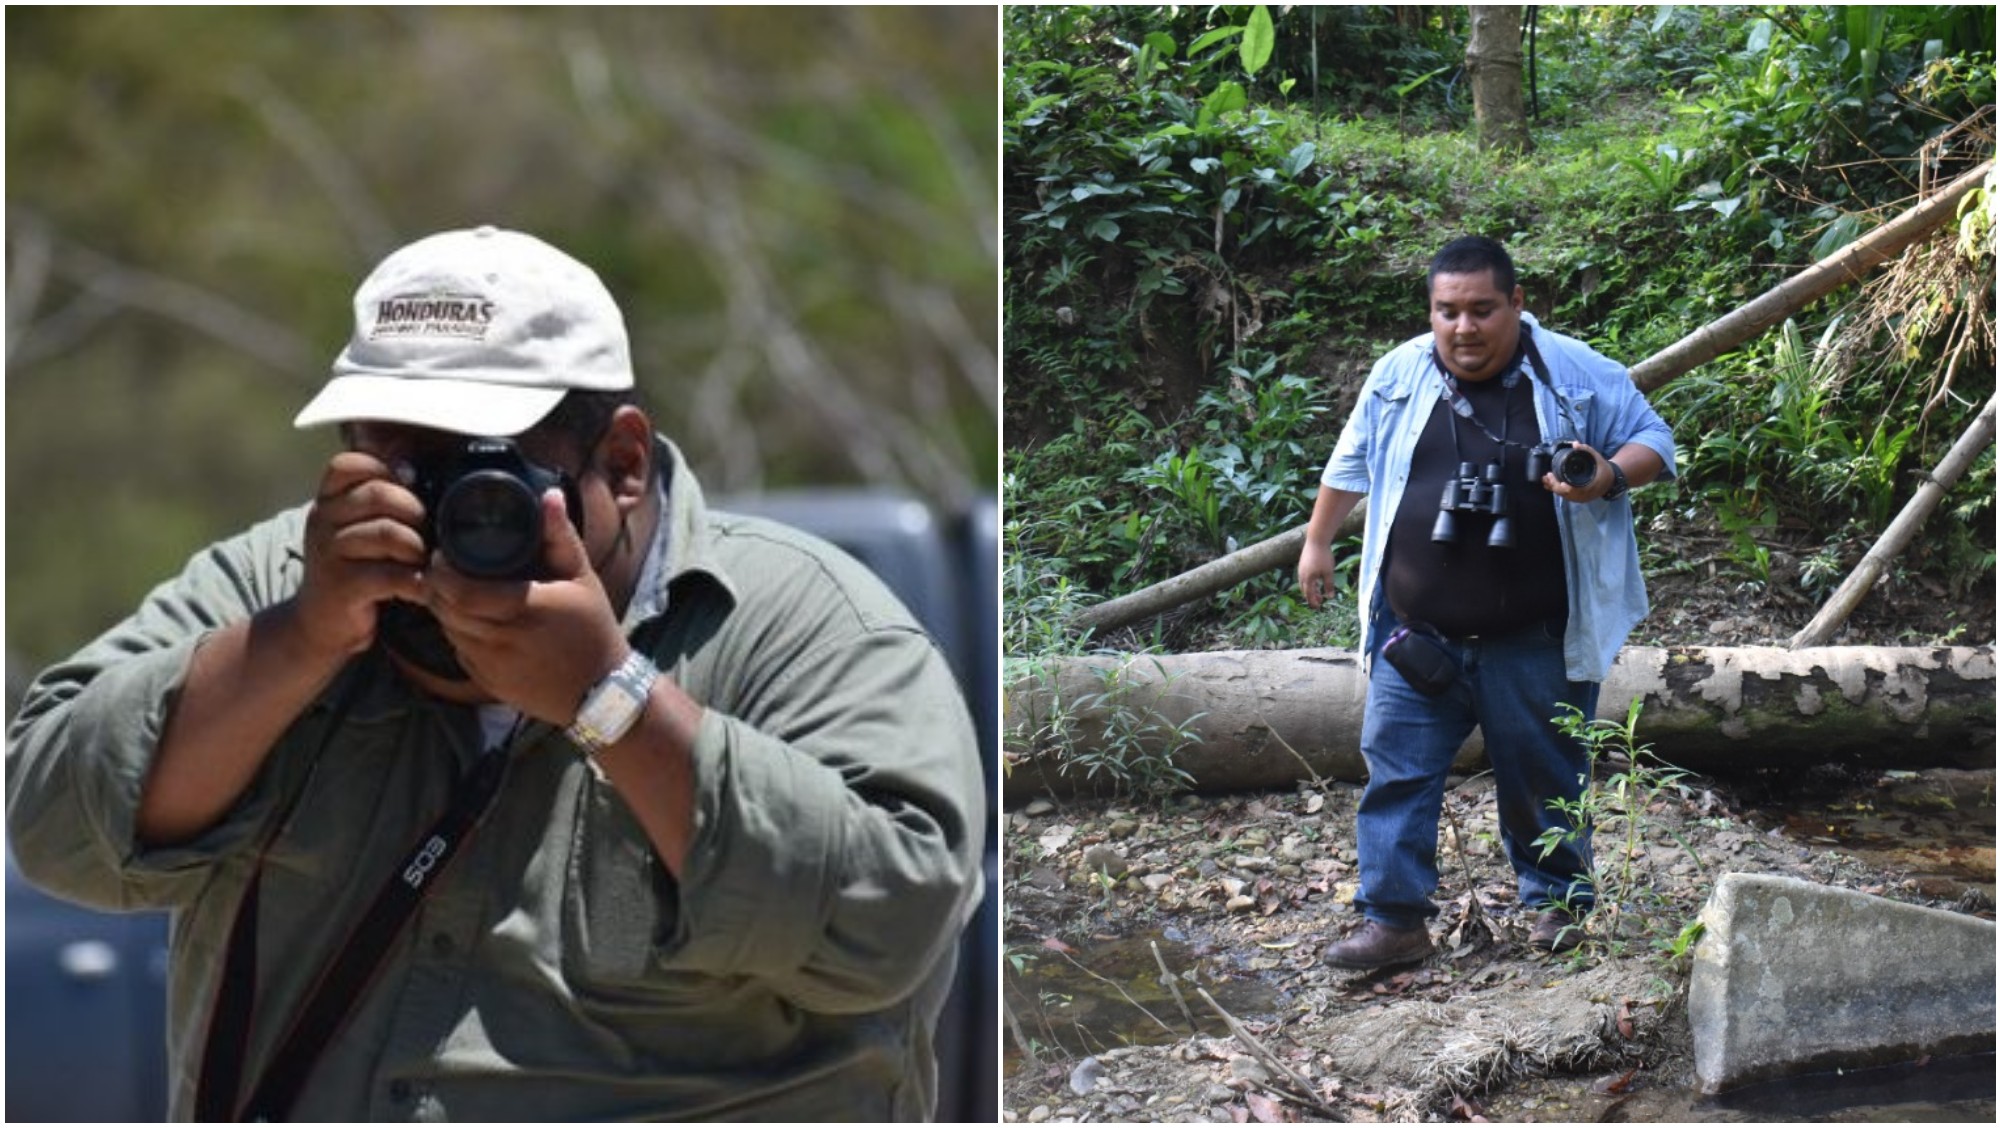 La WFSJ destacó la labor del reportero hondureño Josué Quintana